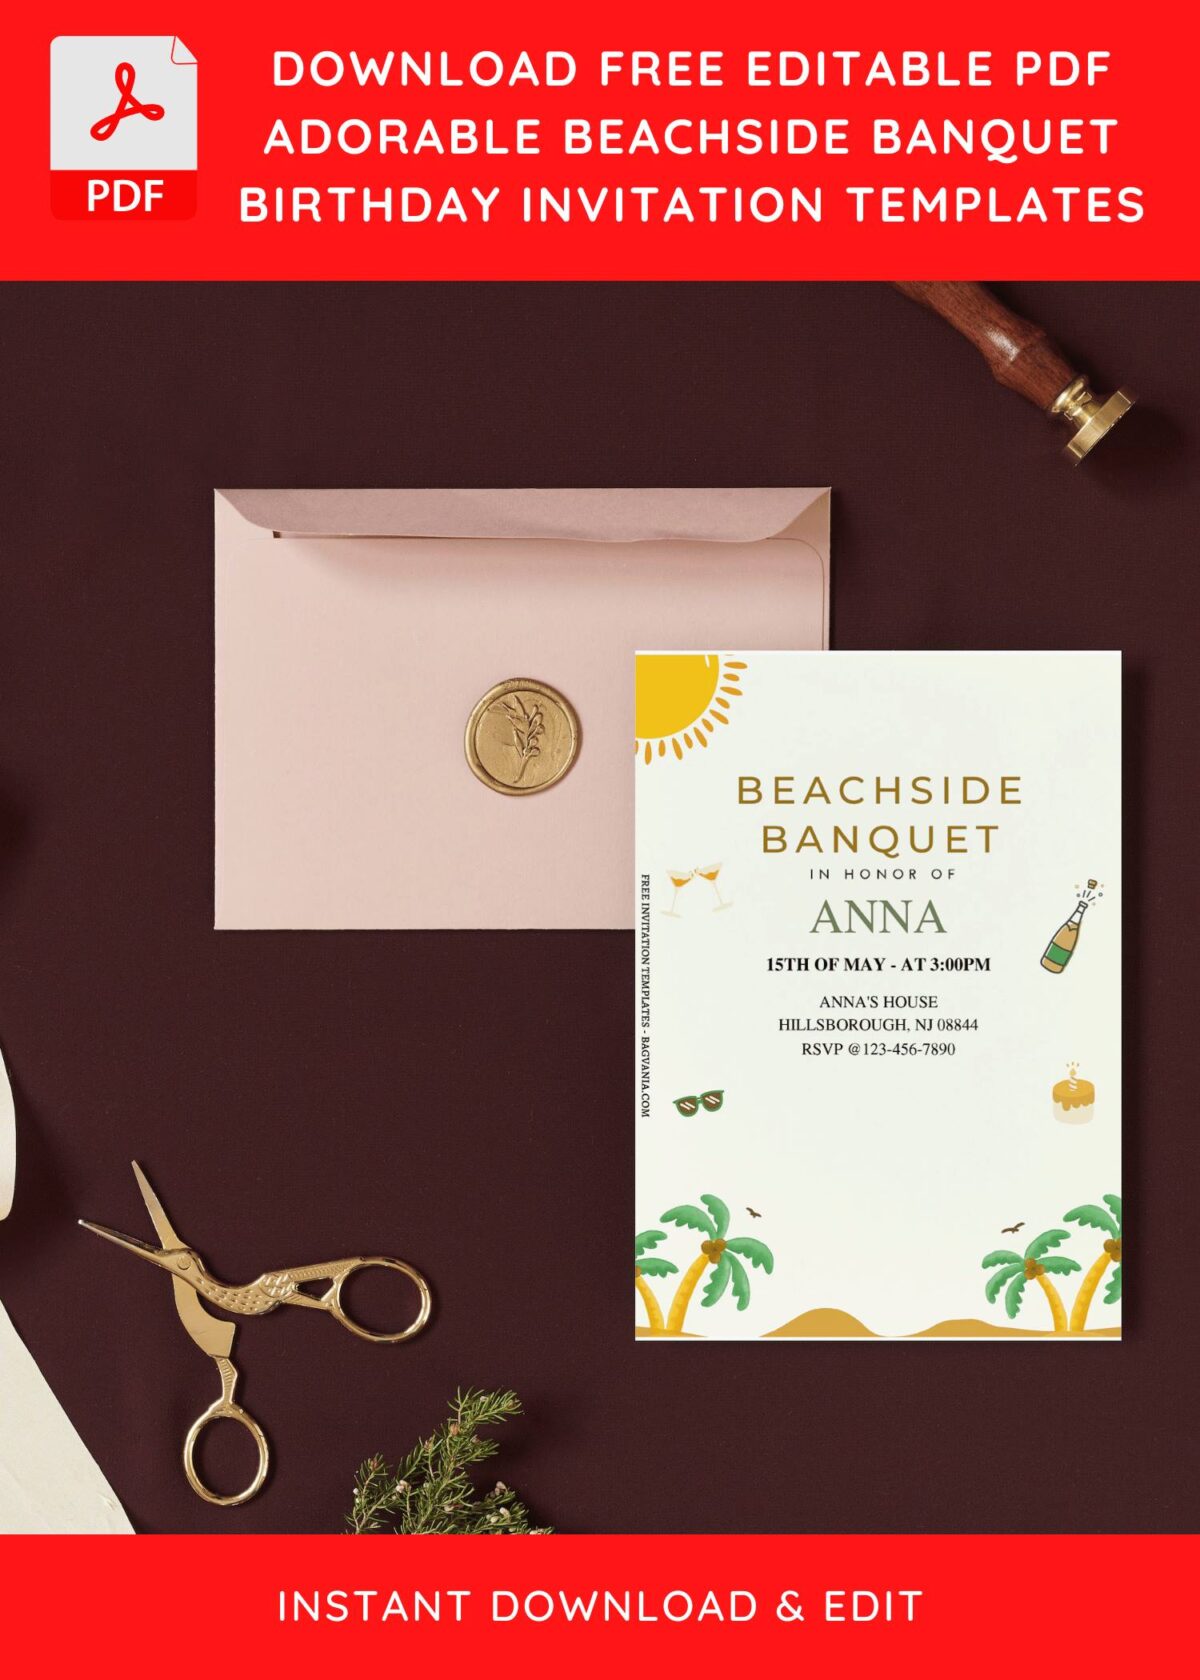 (Free Editable PDF) Summer Beachside Banquet Birthday Invitation Templates I